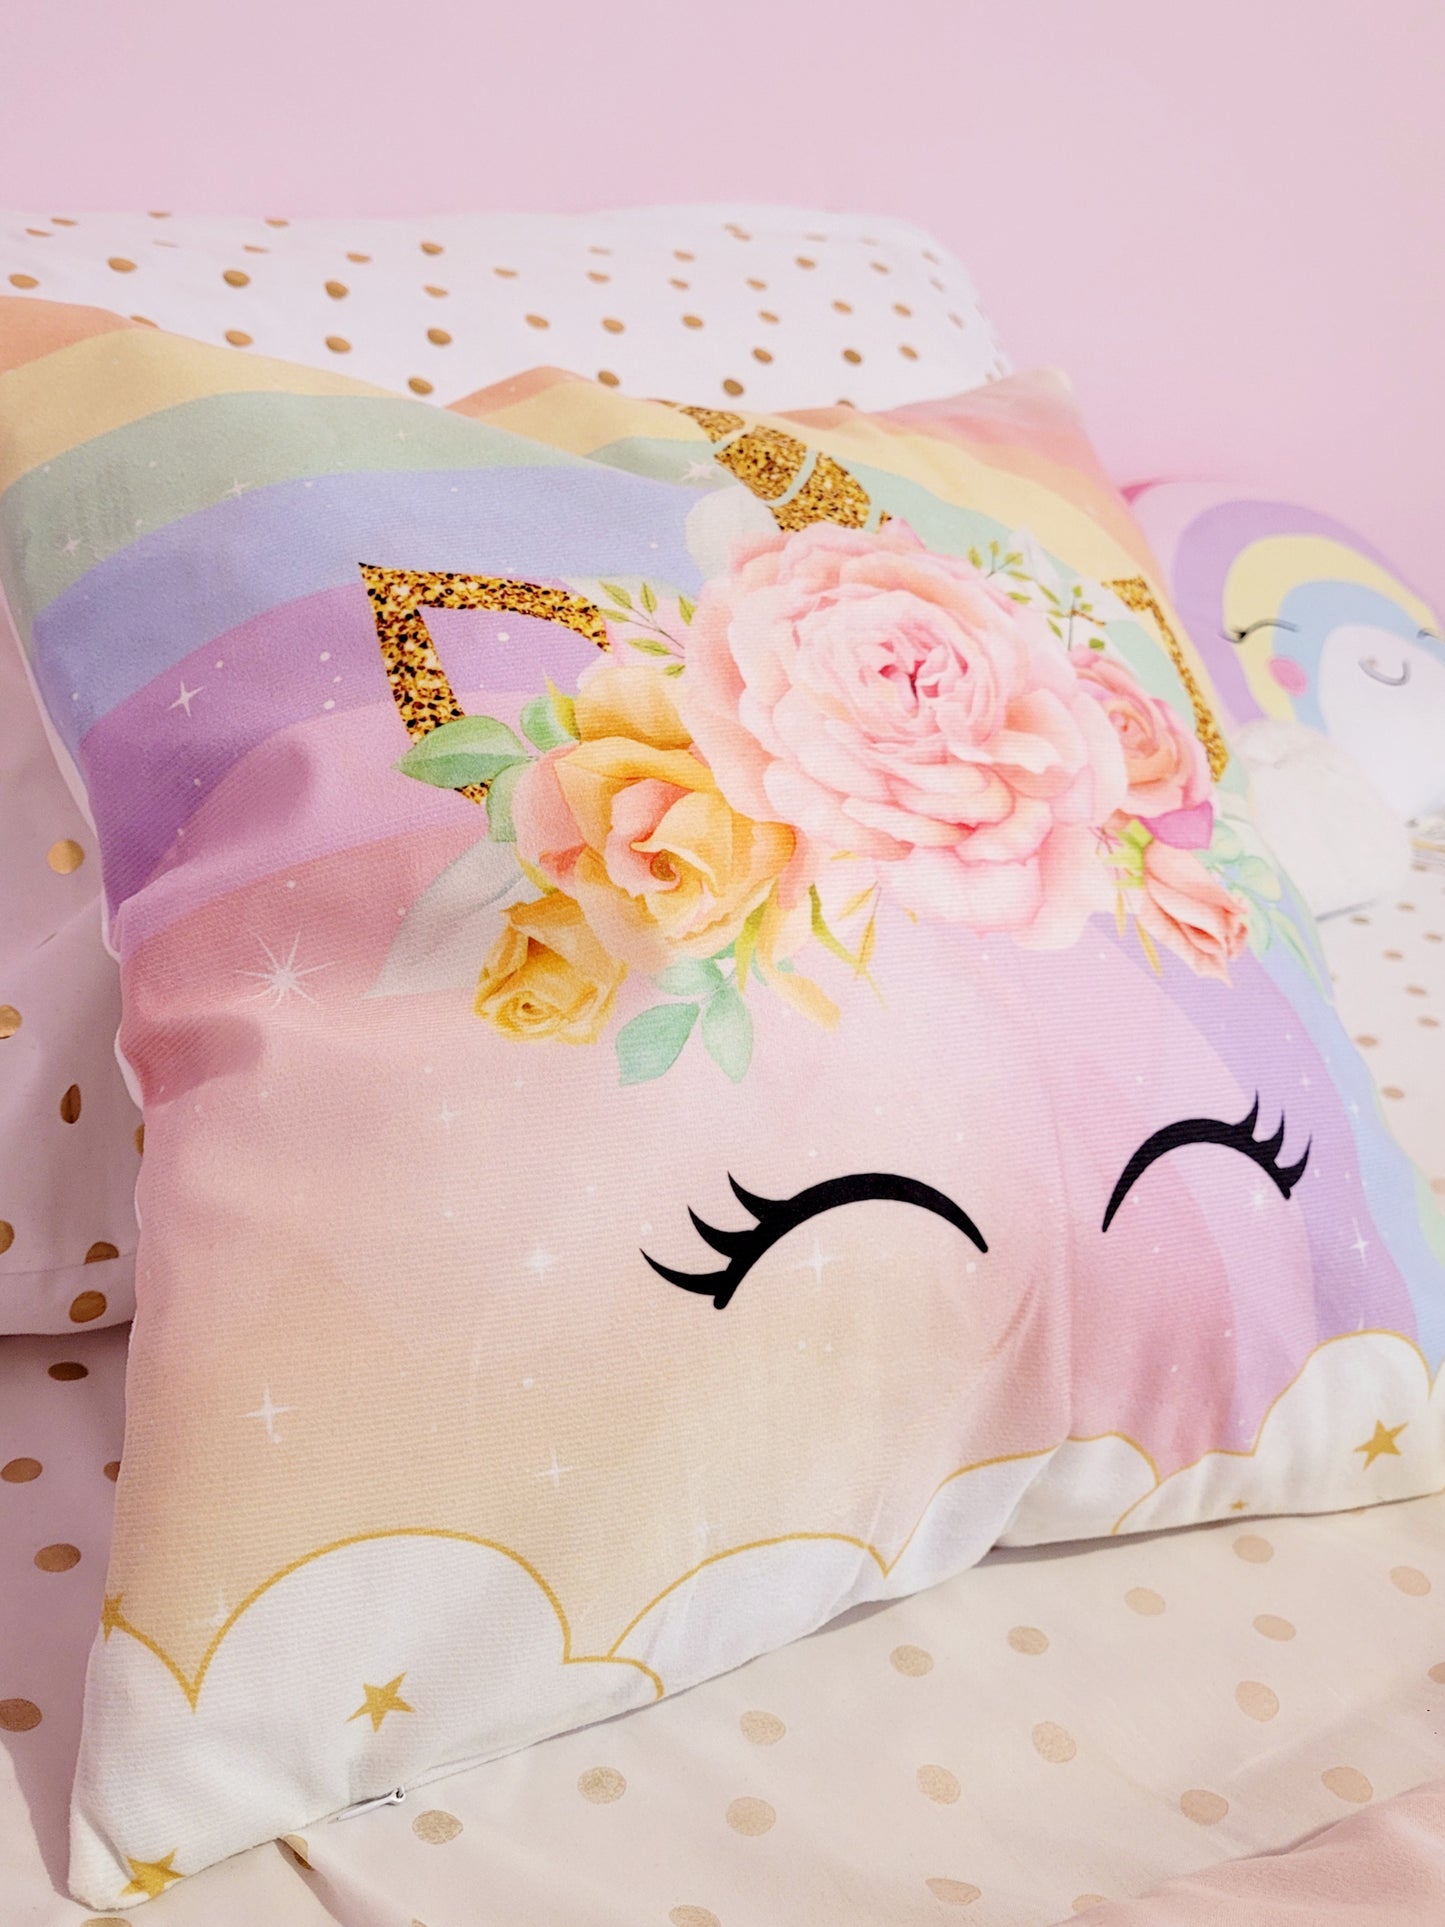 Unicorn Pillowcases